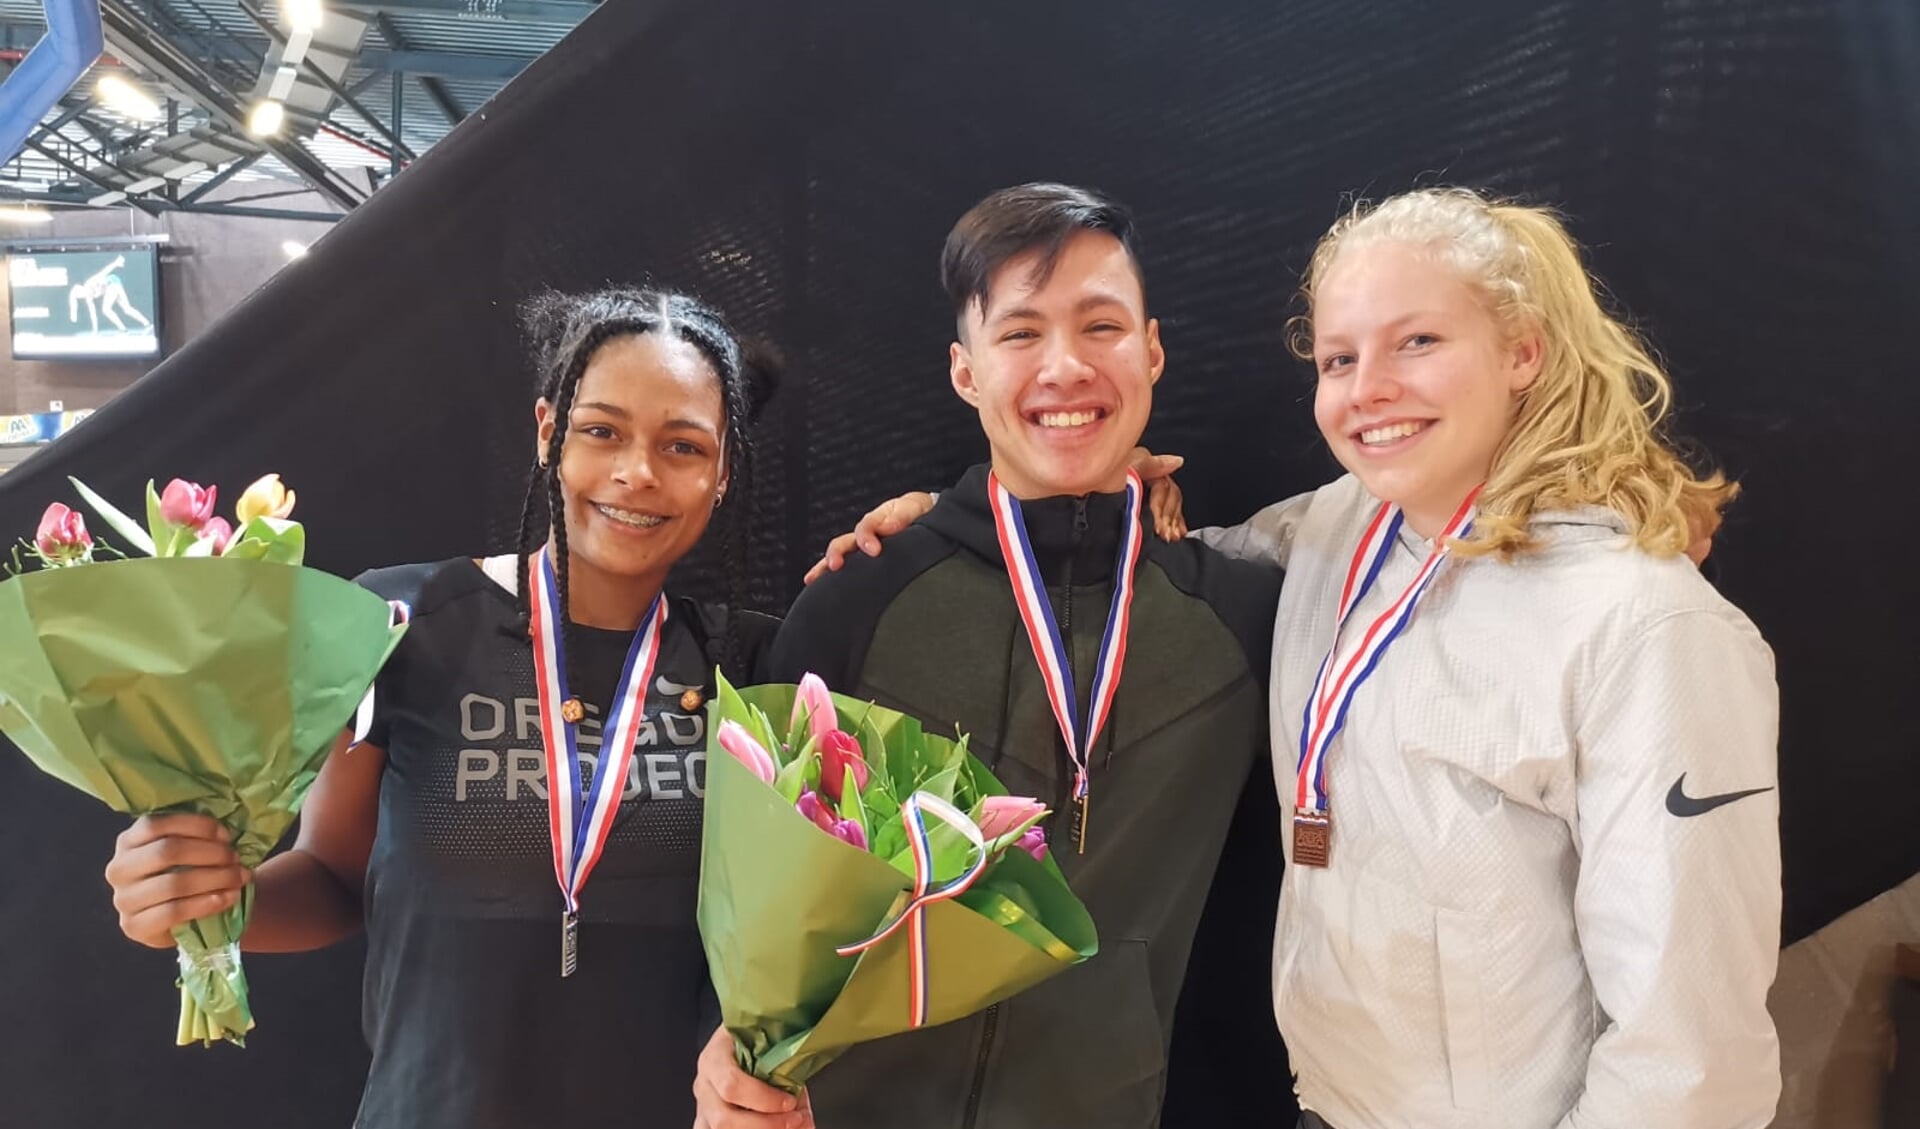 Lara Owobowale, Neal Ott en Eveline de Jong veroverden medailles. 